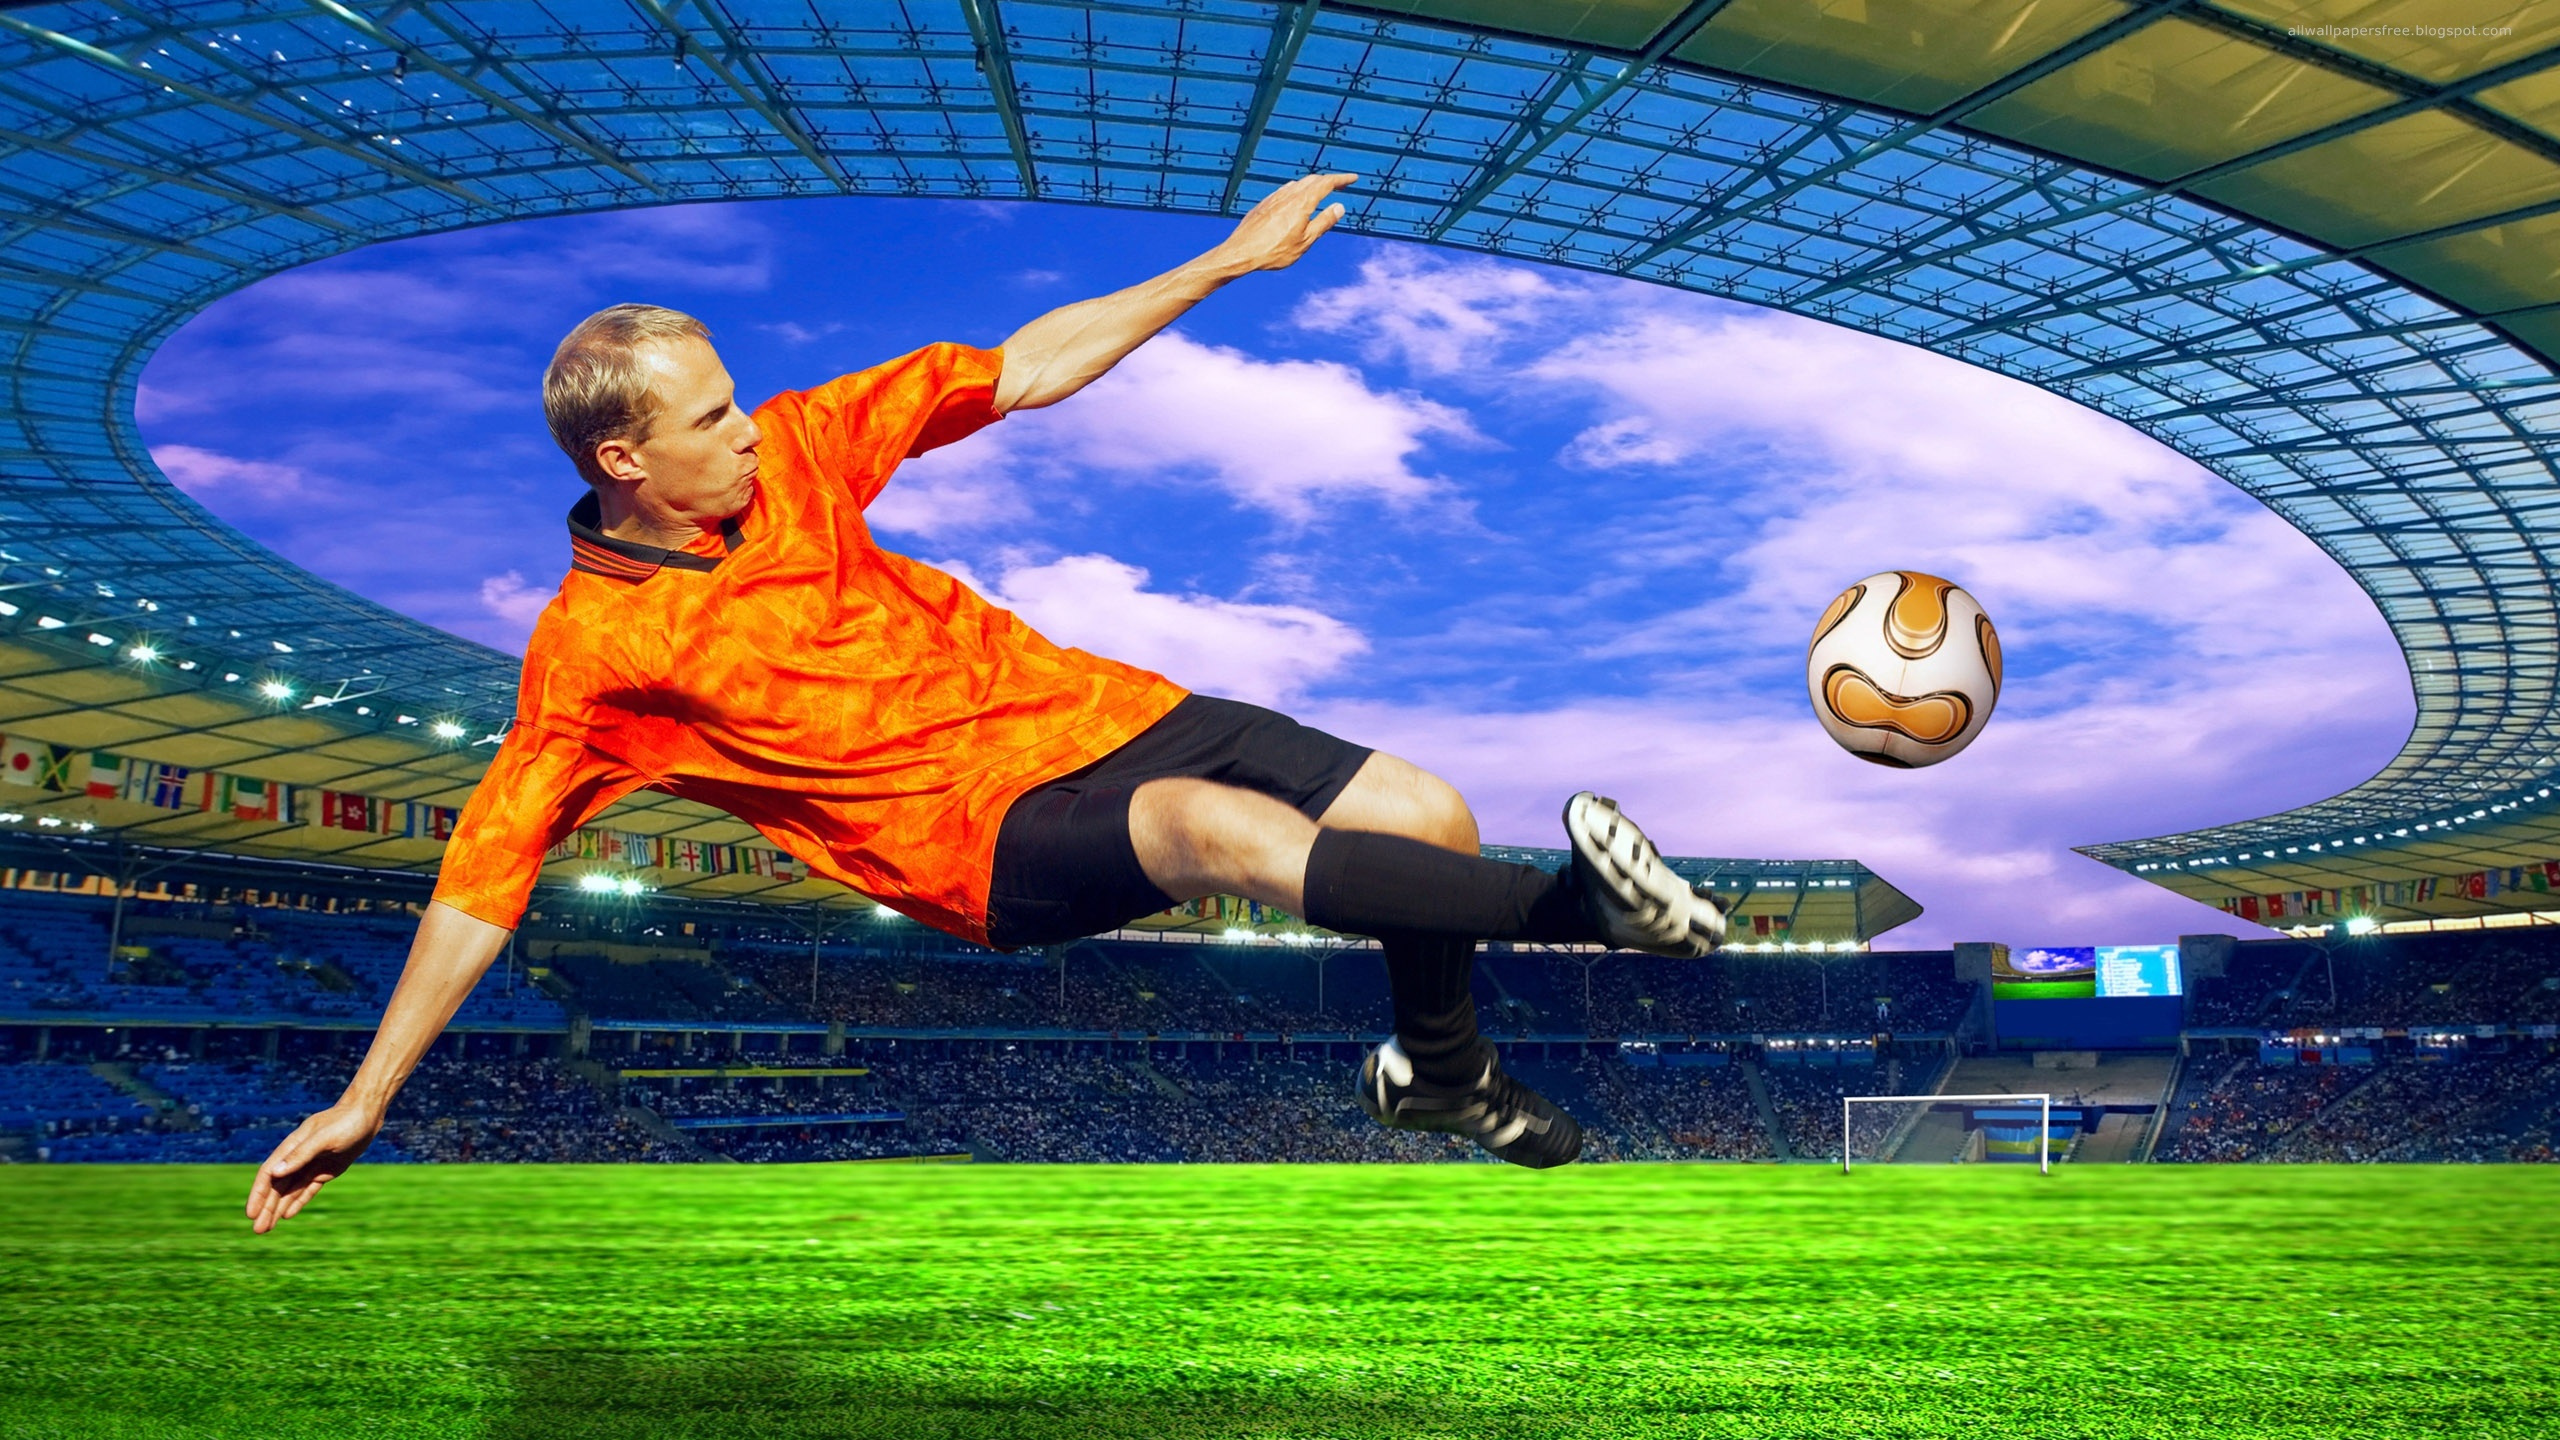 Homme en Maillot de Football Nike Orange et Short Noir Jouant au Football. Wallpaper in 2560x1440 Resolution